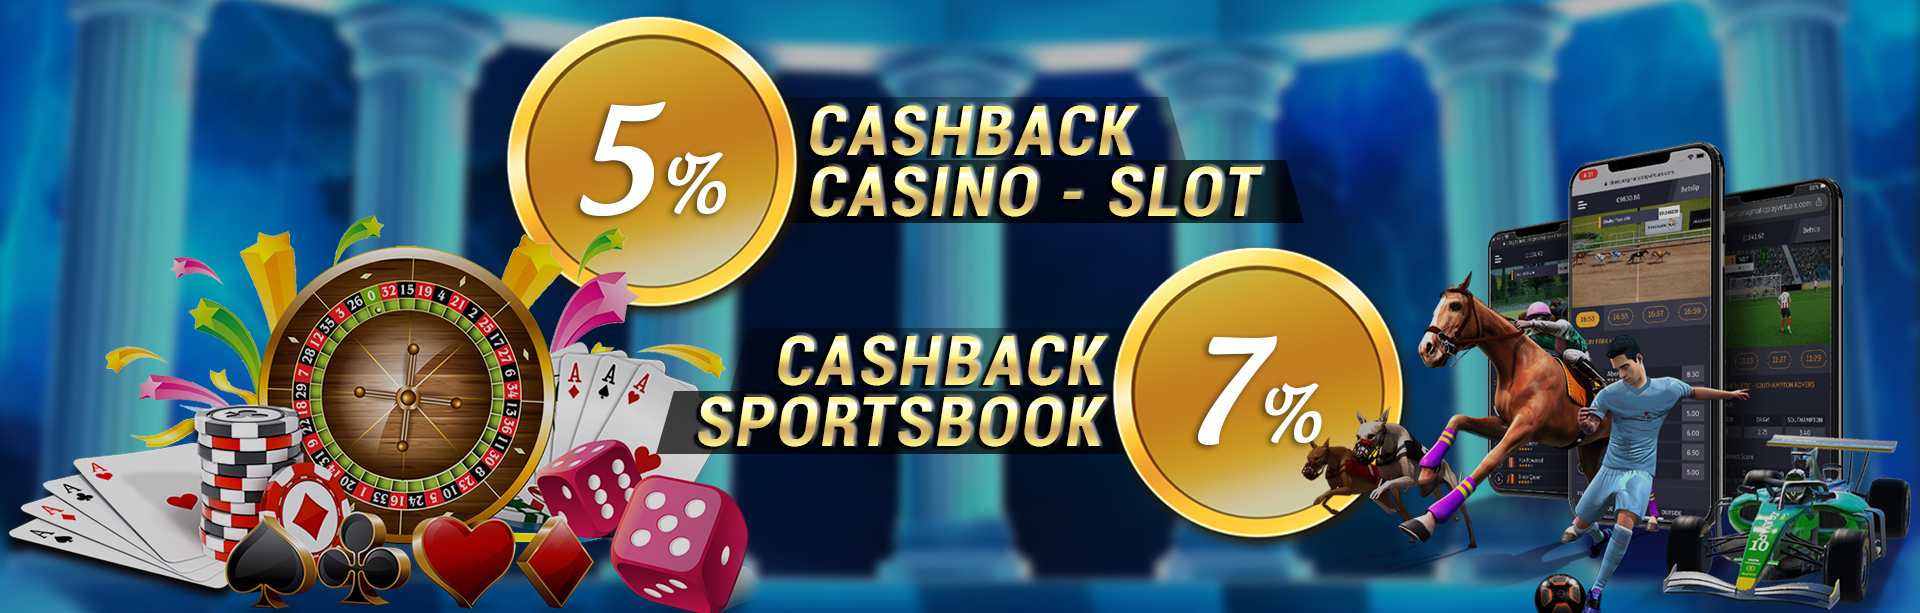 Cashback Casino-Slot-Sportbook